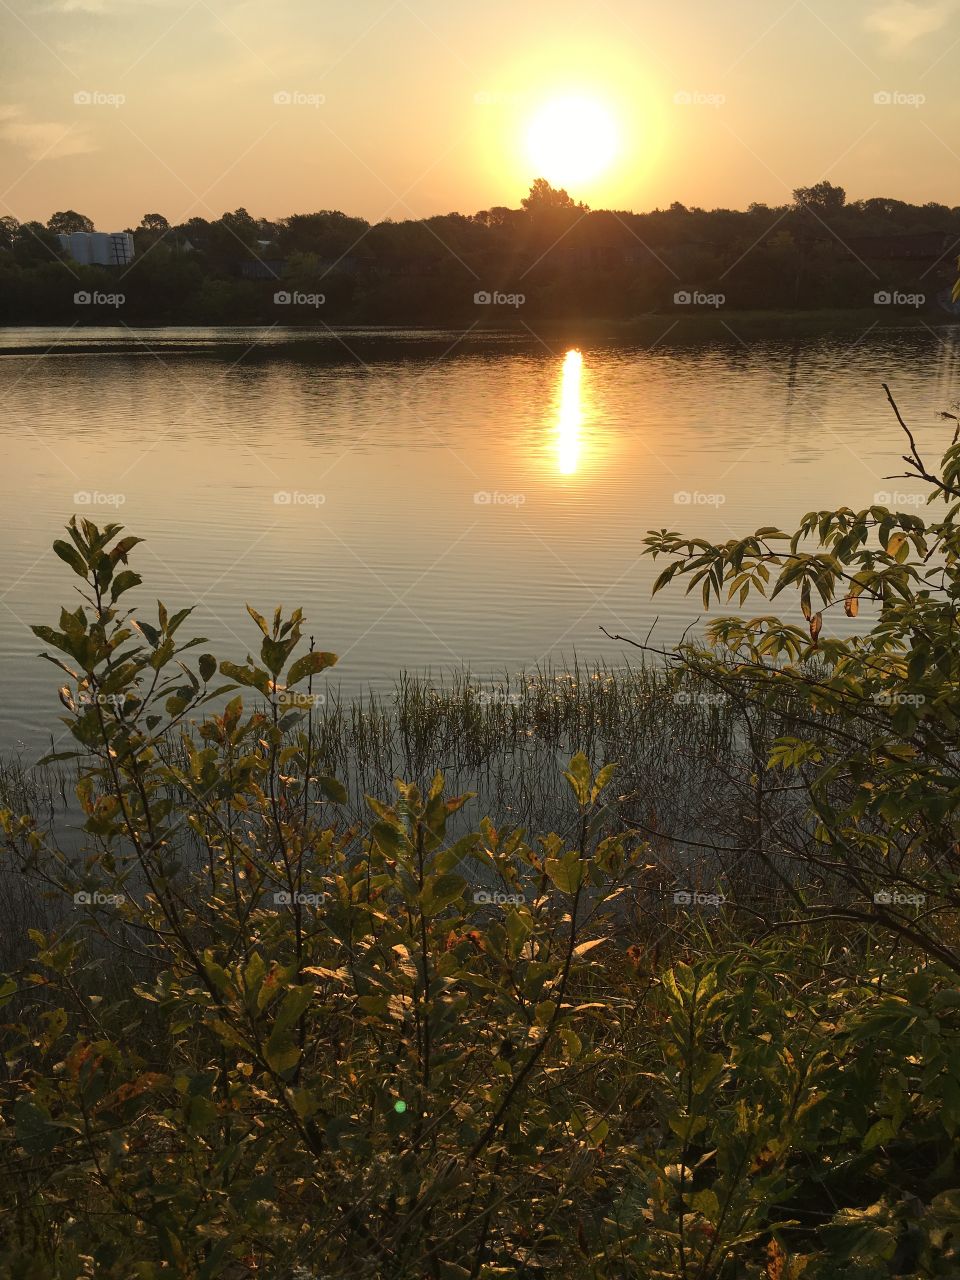 Sunrise on the river 